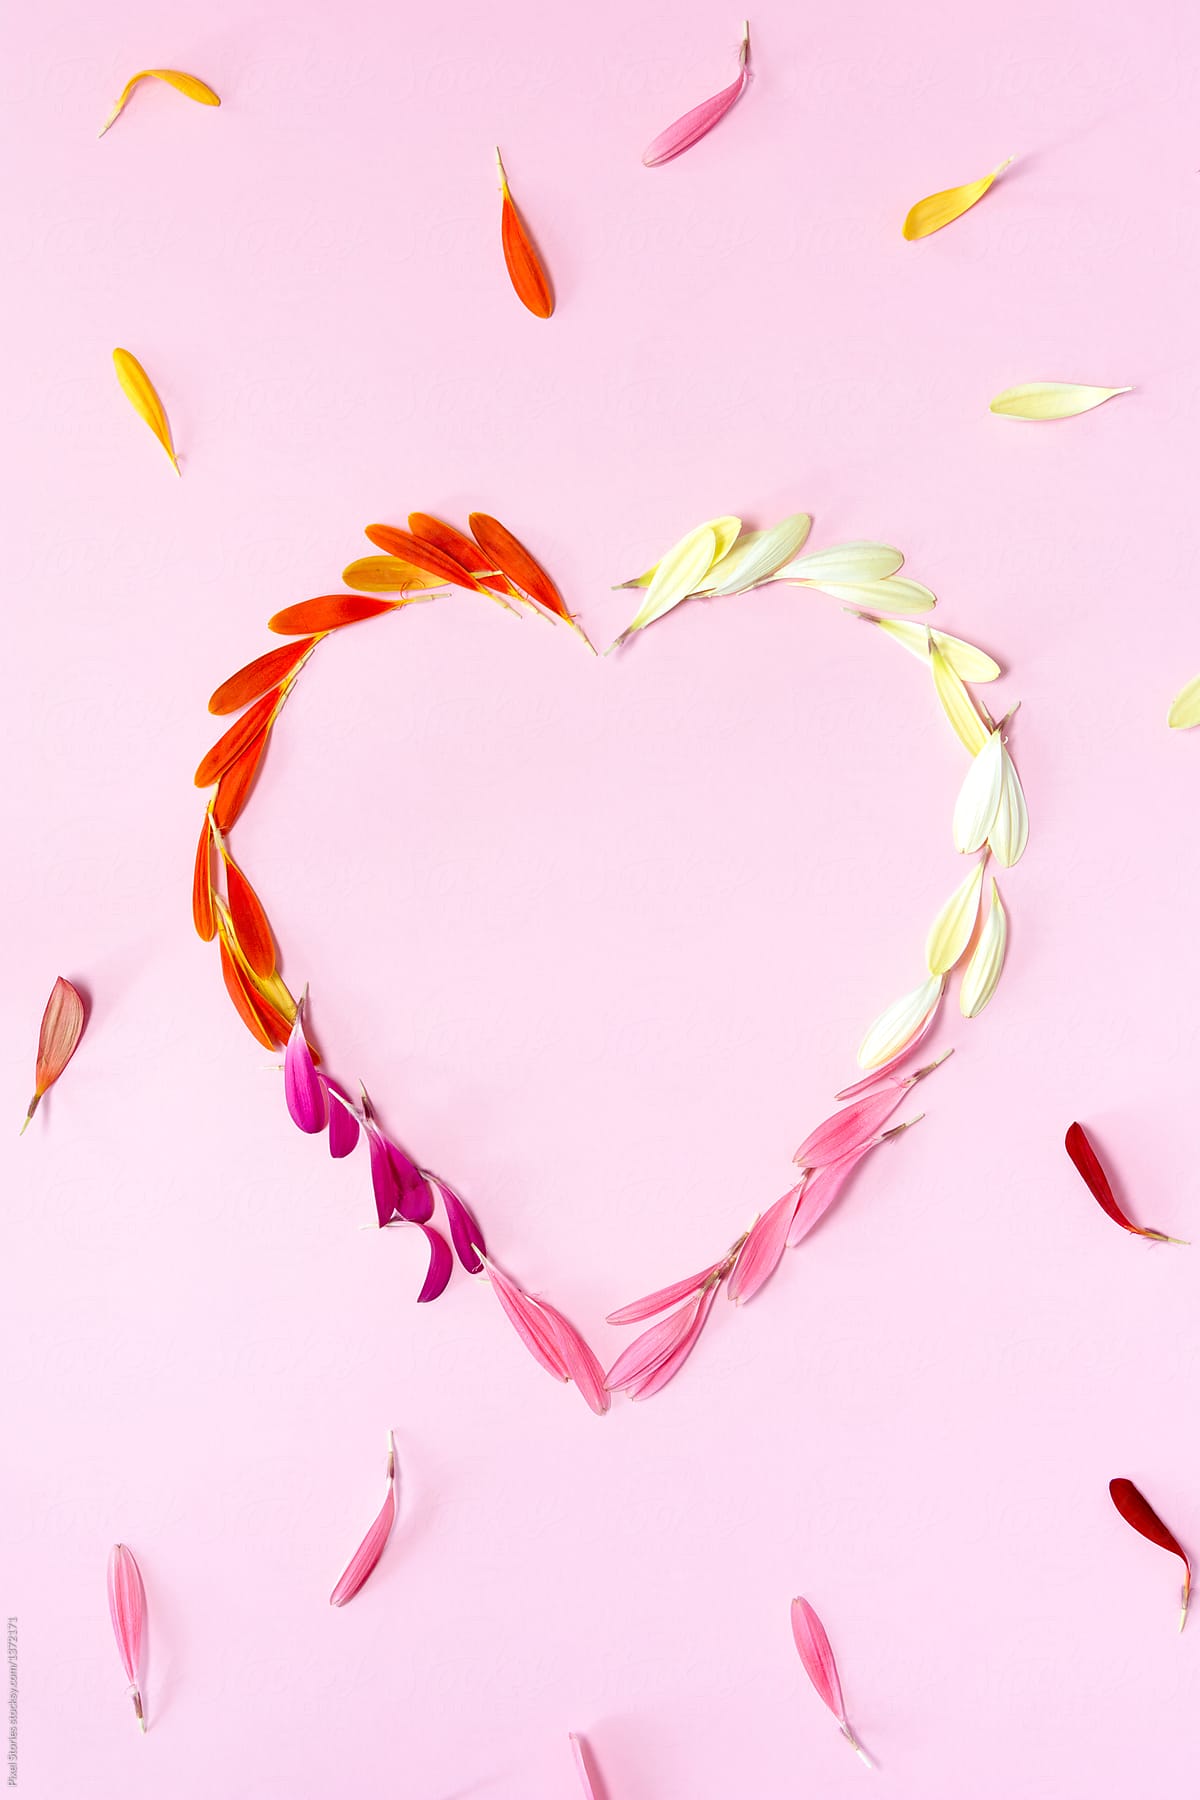 Heart made of Gerbera flower petals on a pink background